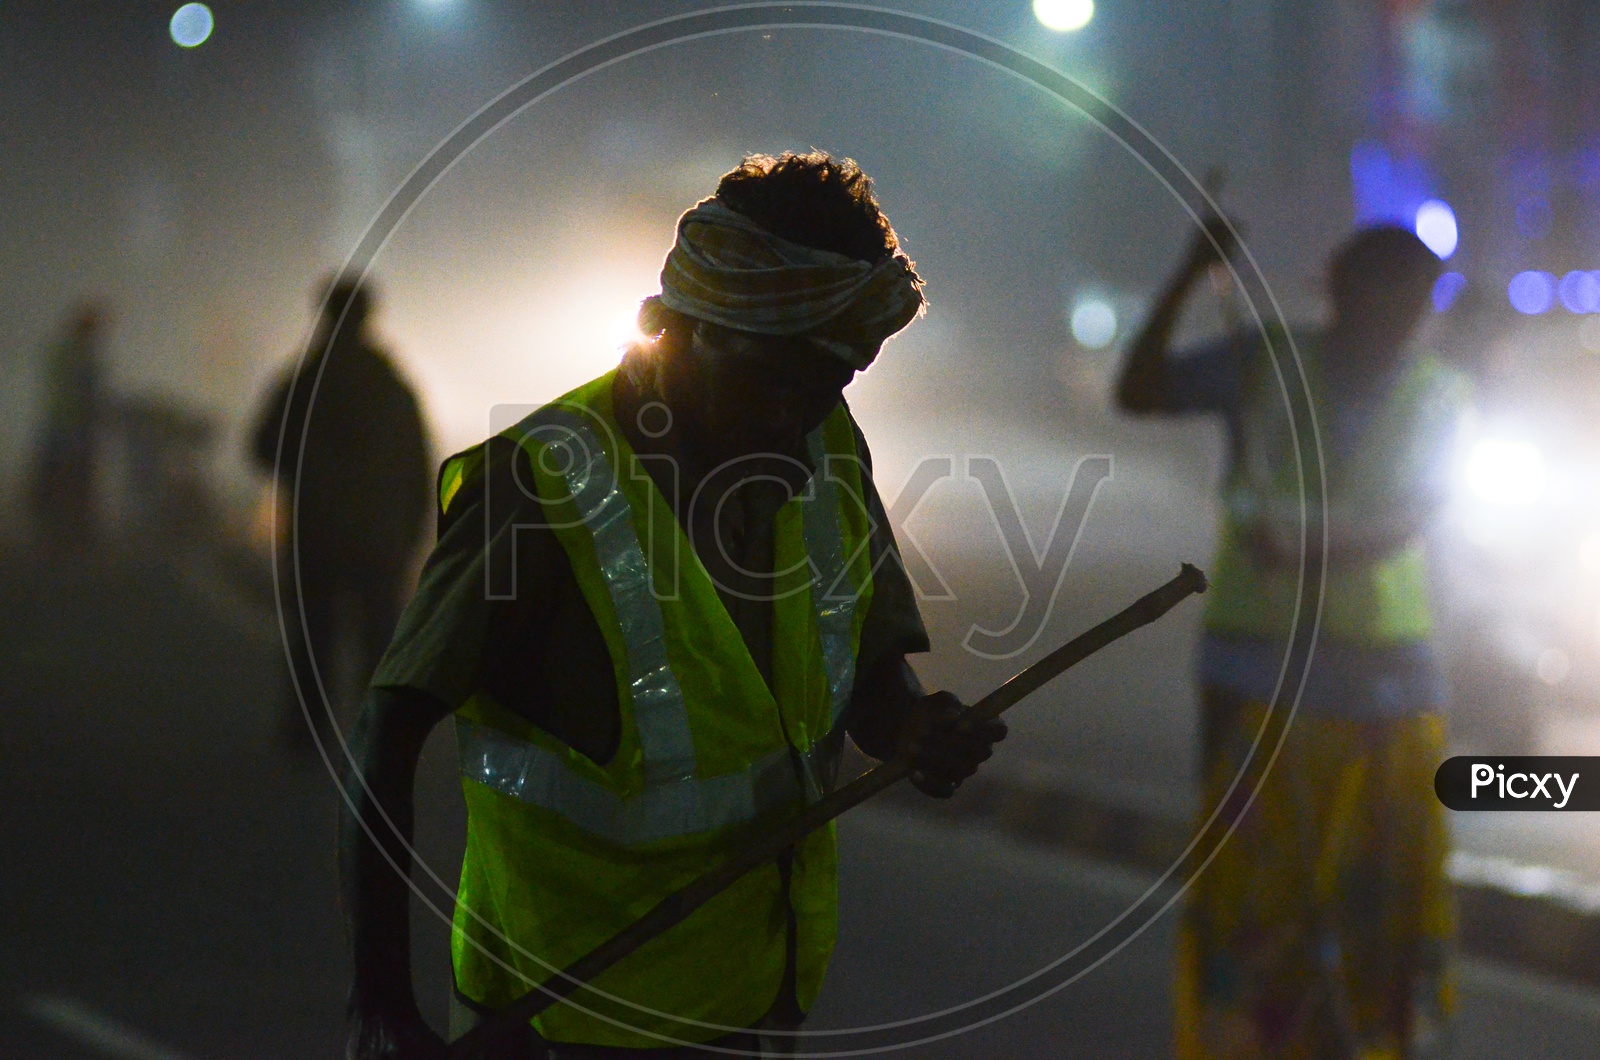 VMC worker, Sweeper, Sanitary